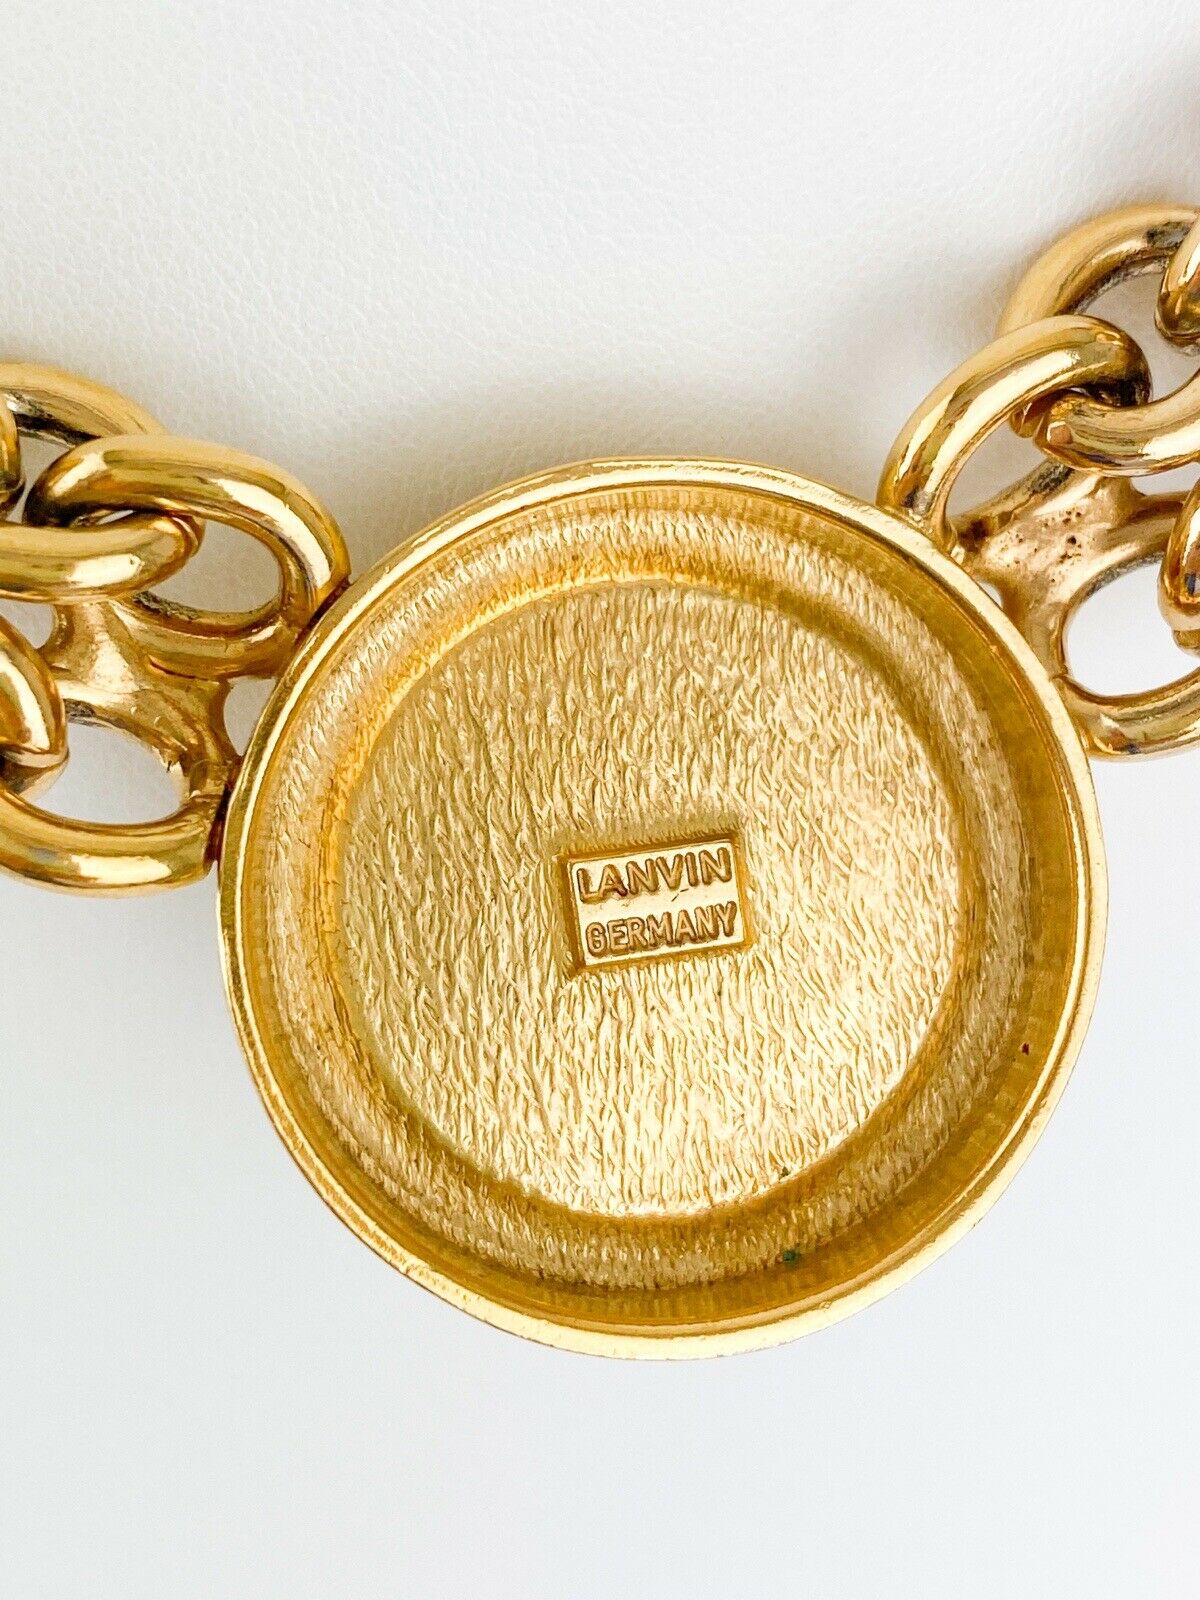 LANVIN Germany Gold Tone Gorgeous Choker Necklace Faux Pearl Vintage